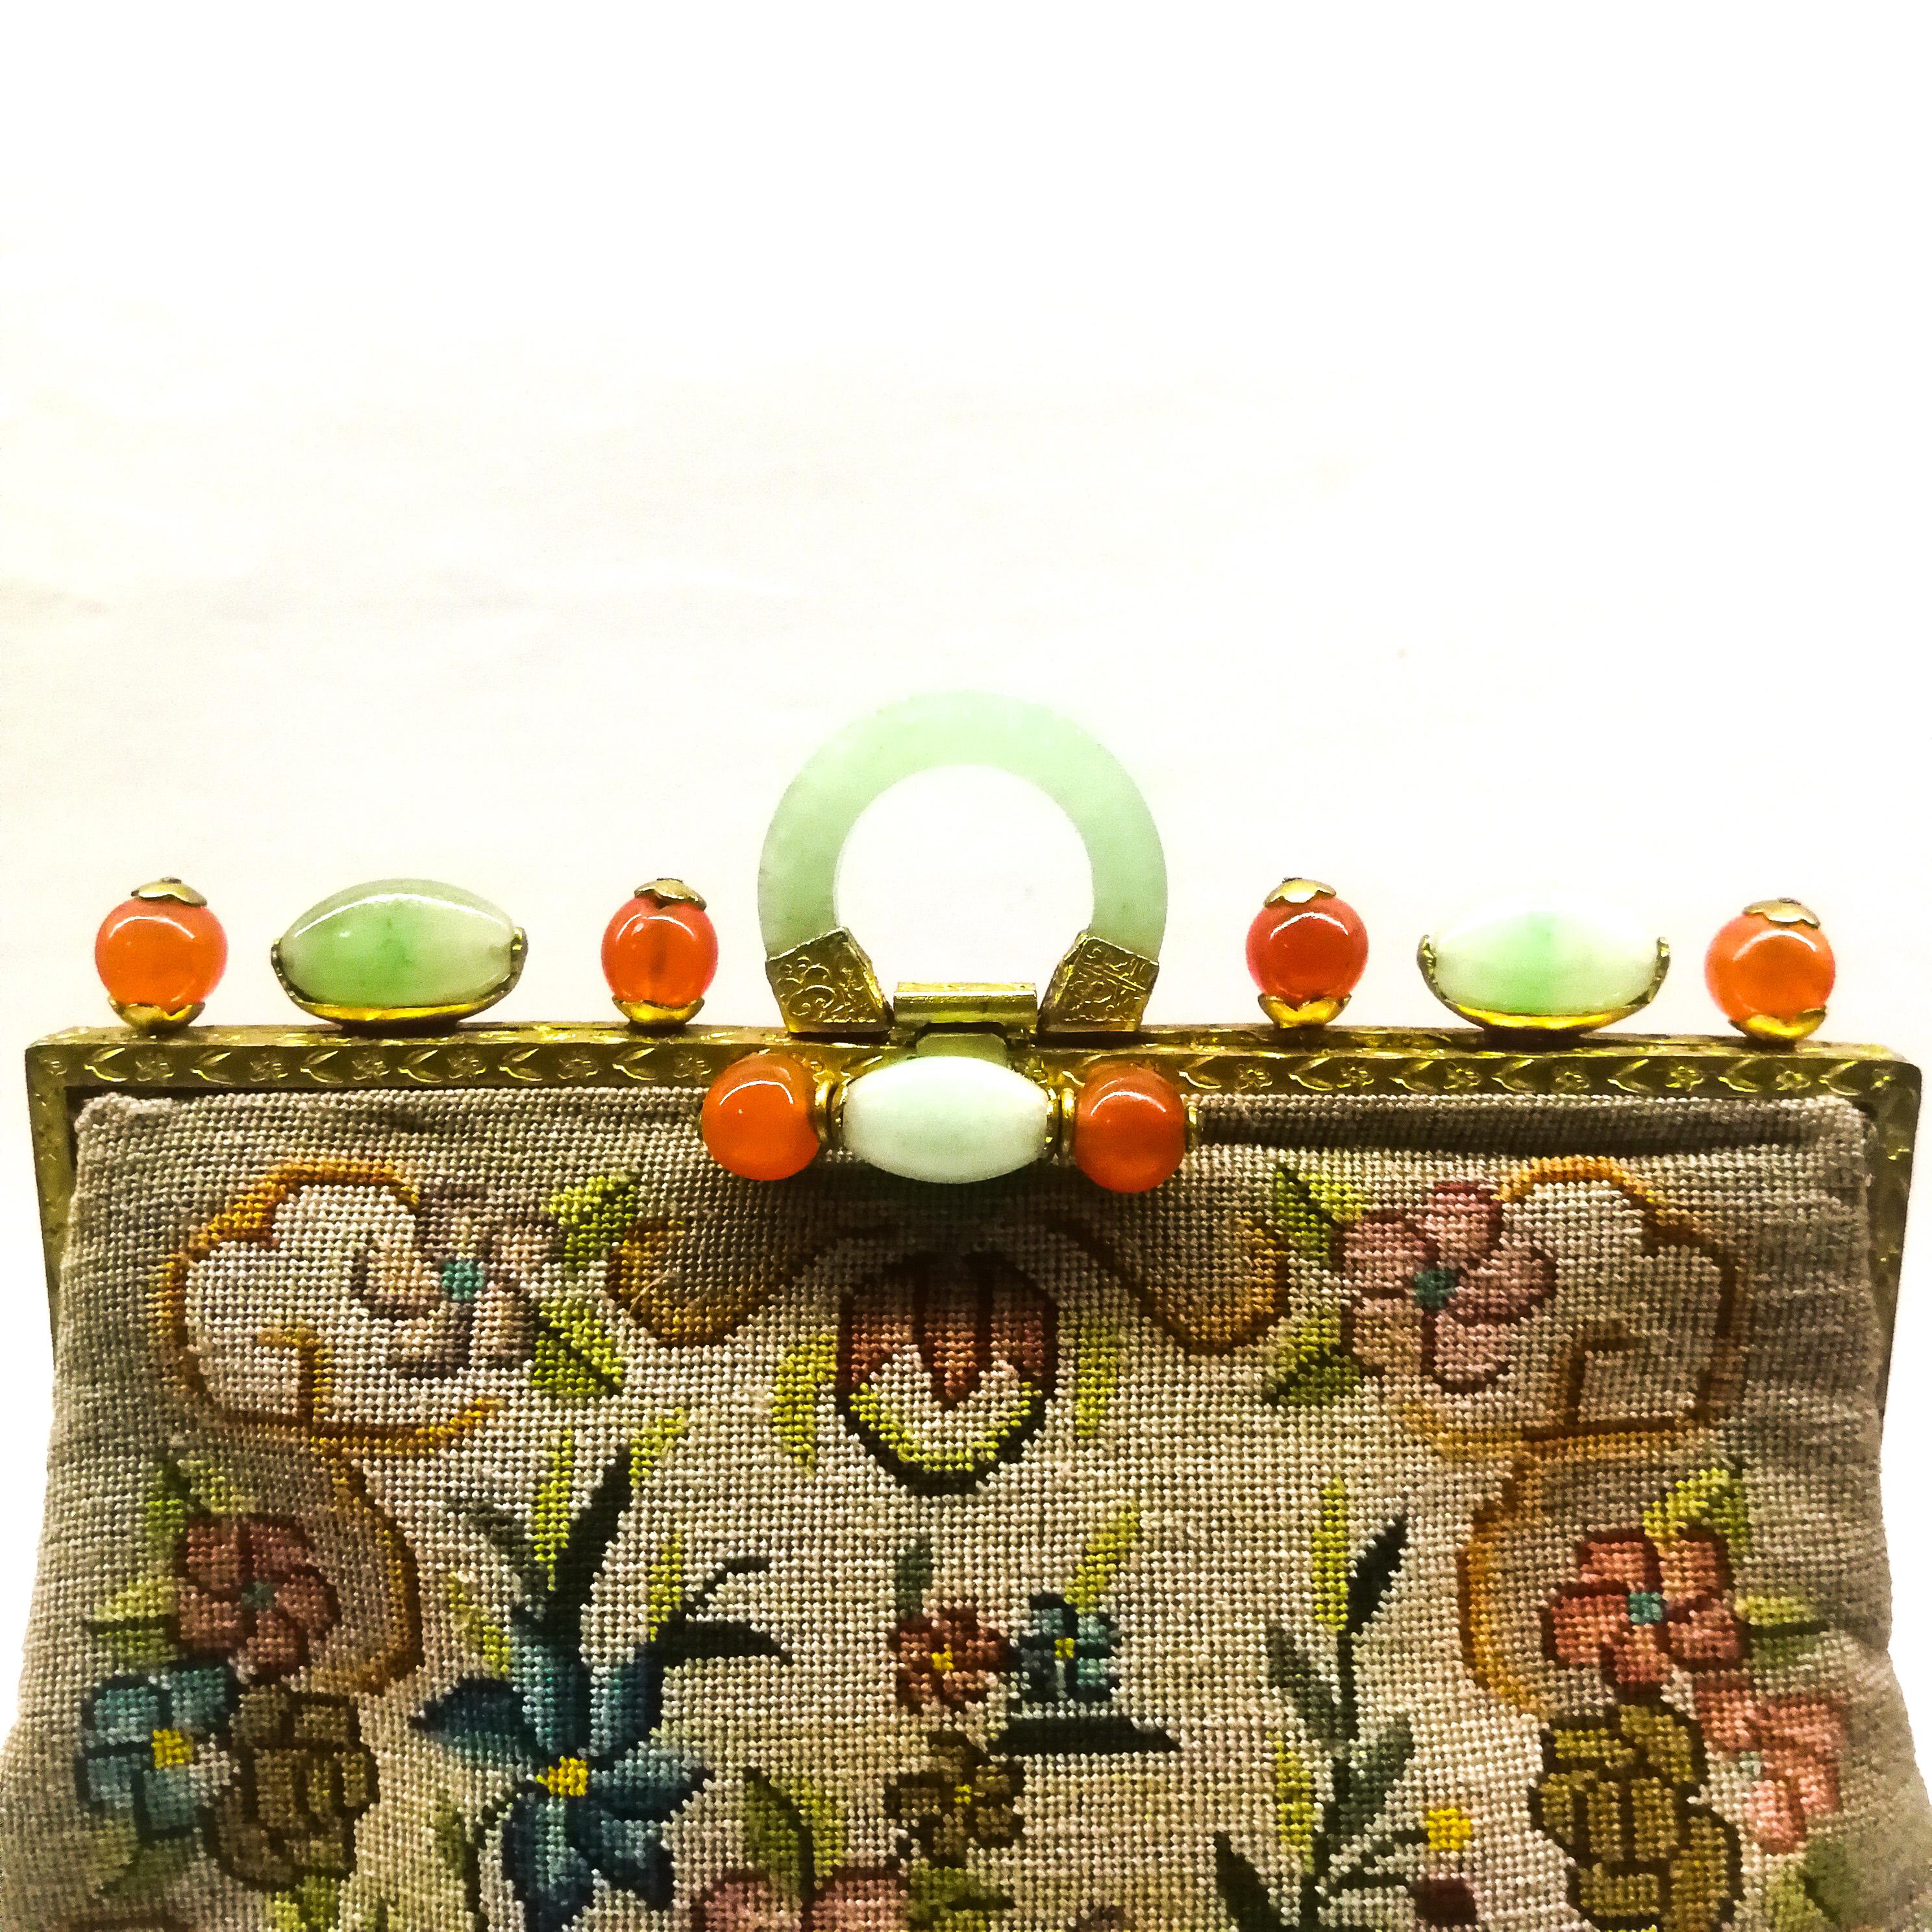 Women's An Art Deco exquisite jade and cornelian stone frame petitpoint handbag, 1920s.